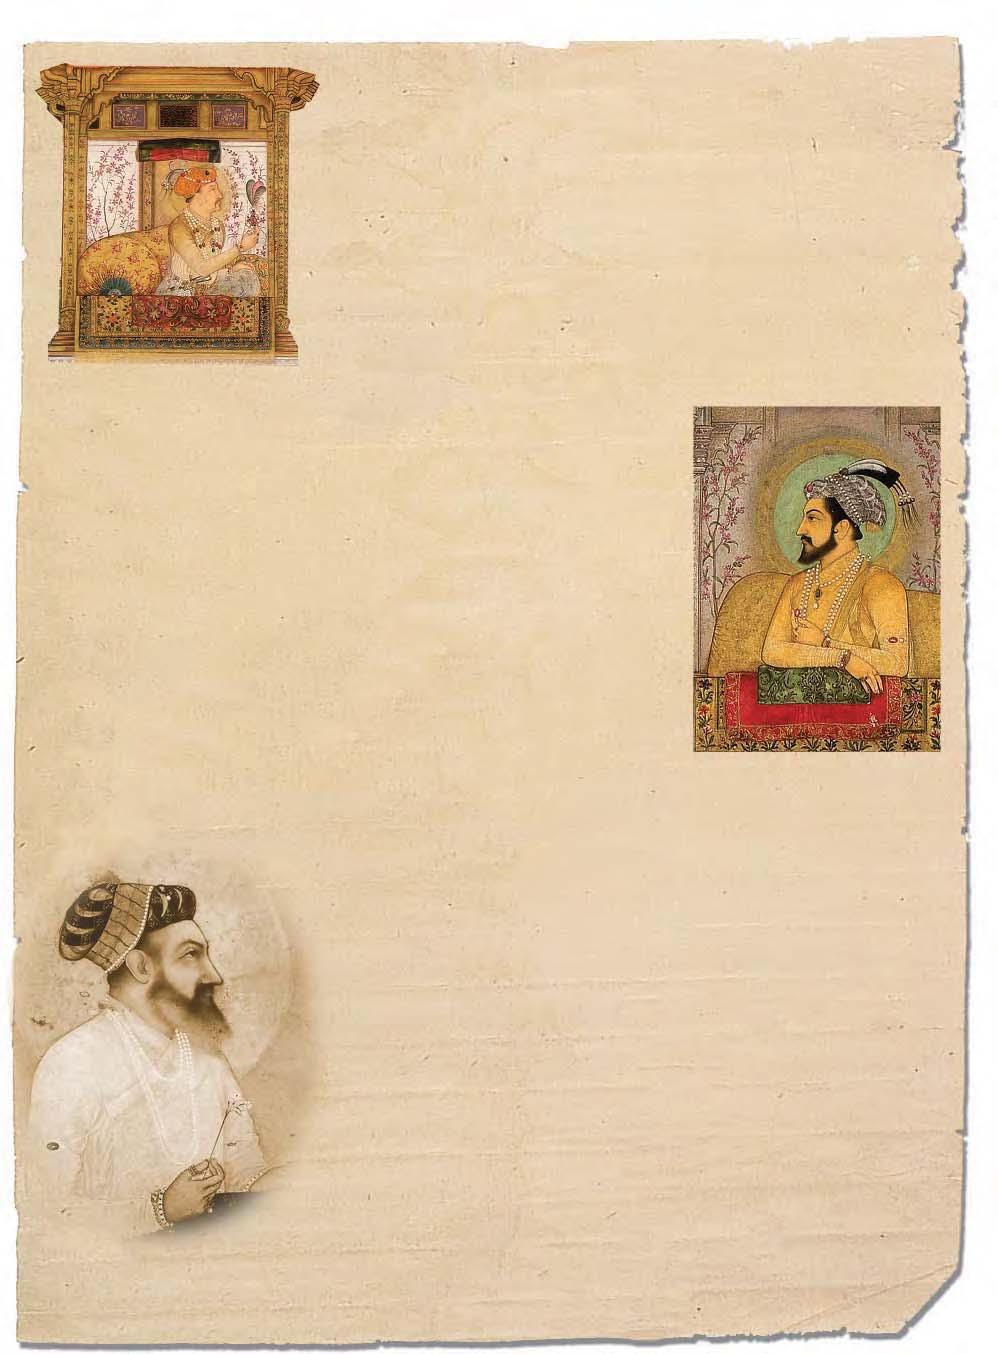 Jahangir 1605-1627- Military campaigns started by Akbar continued. The Sisodiya ruler of Mewar, Amar Singh, accepted Mughal service.